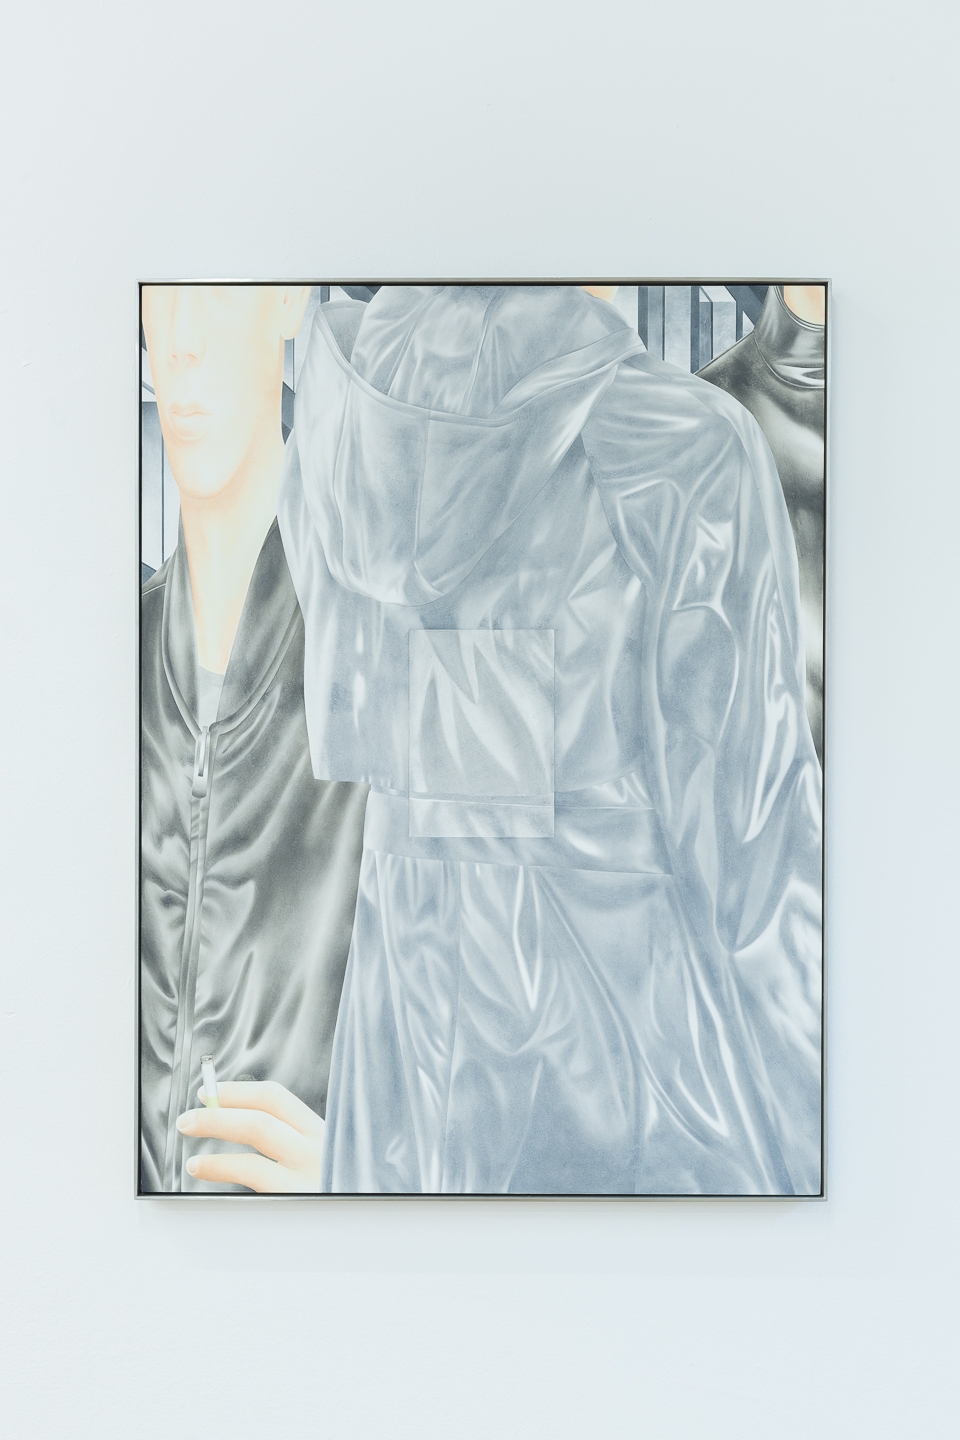 Sebastian Burger, Passerby, 2020, Oil on Aluminium, 61x45cm